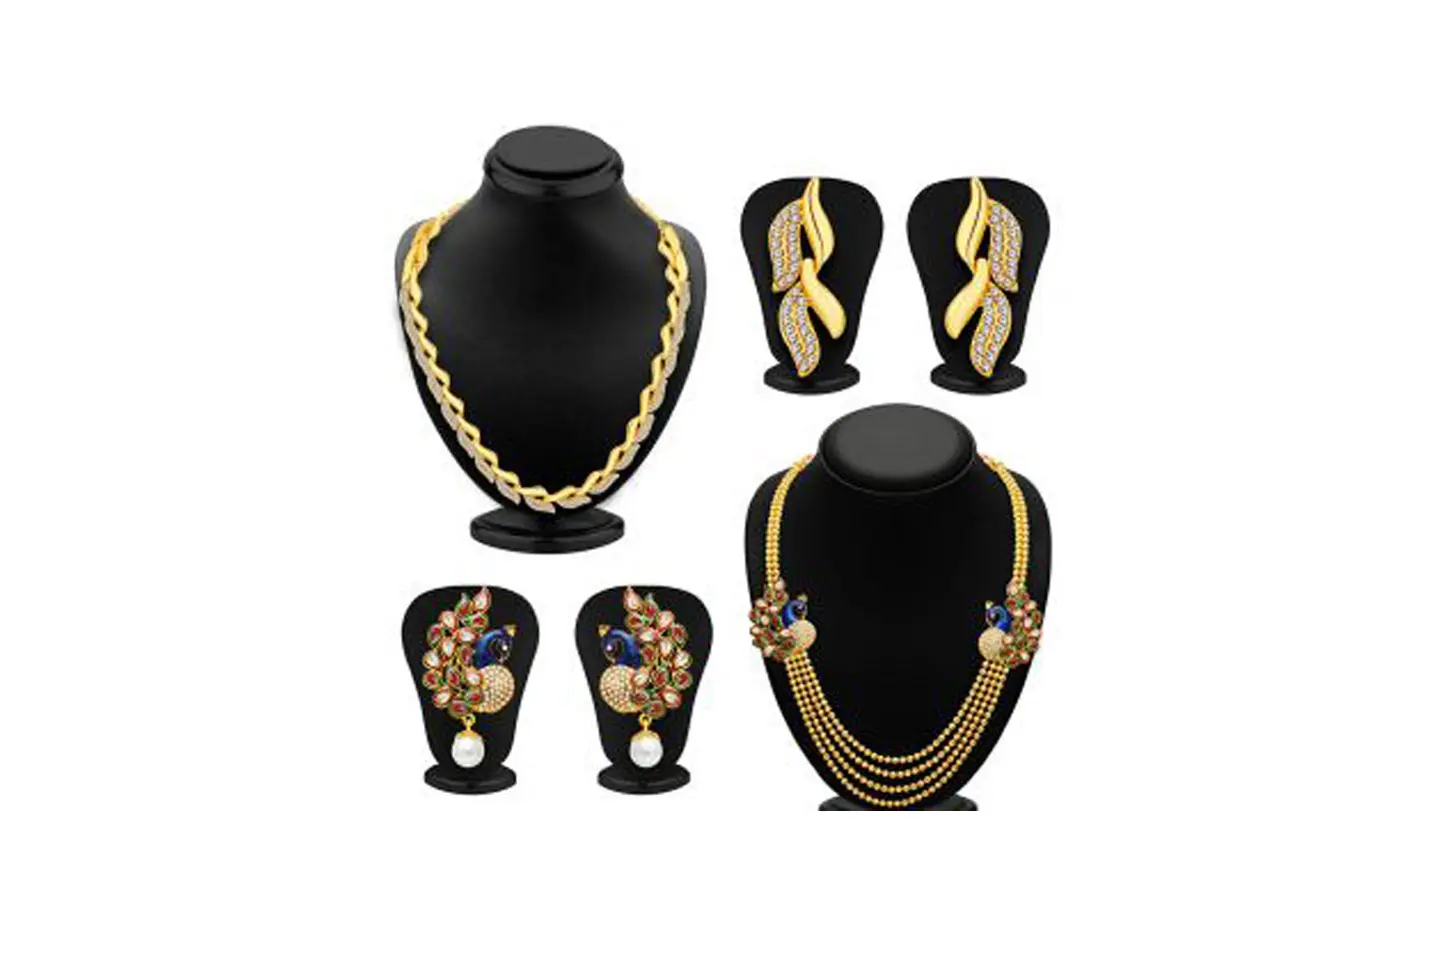 Availability of Large varieties of ladies accessories - Kallarackal Collections - Kottayam